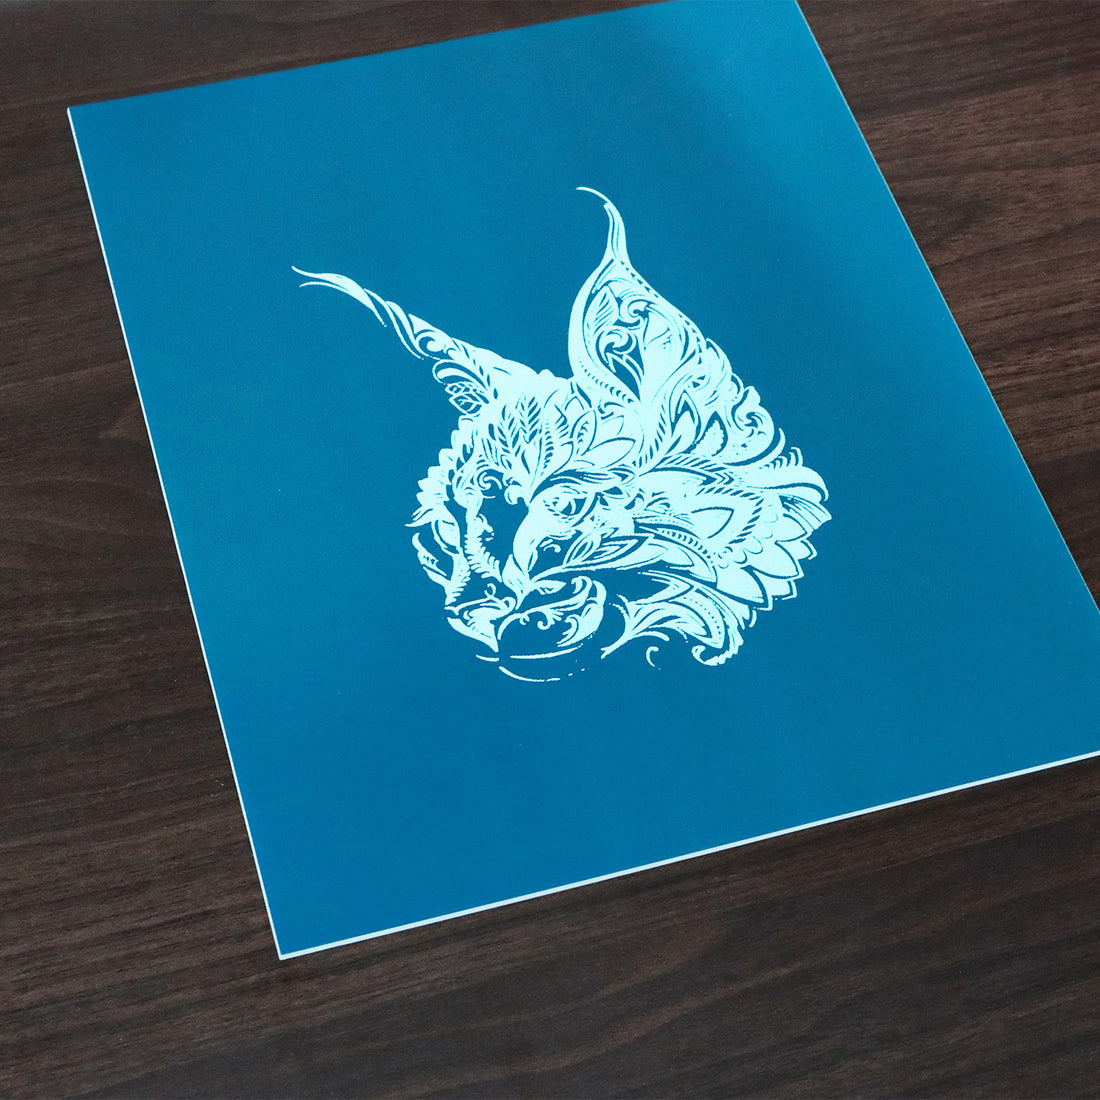 Scratch Acrylic - Capricorn Series - Navy Blue/White - 11.8" x 9.45" - (4Pcs)